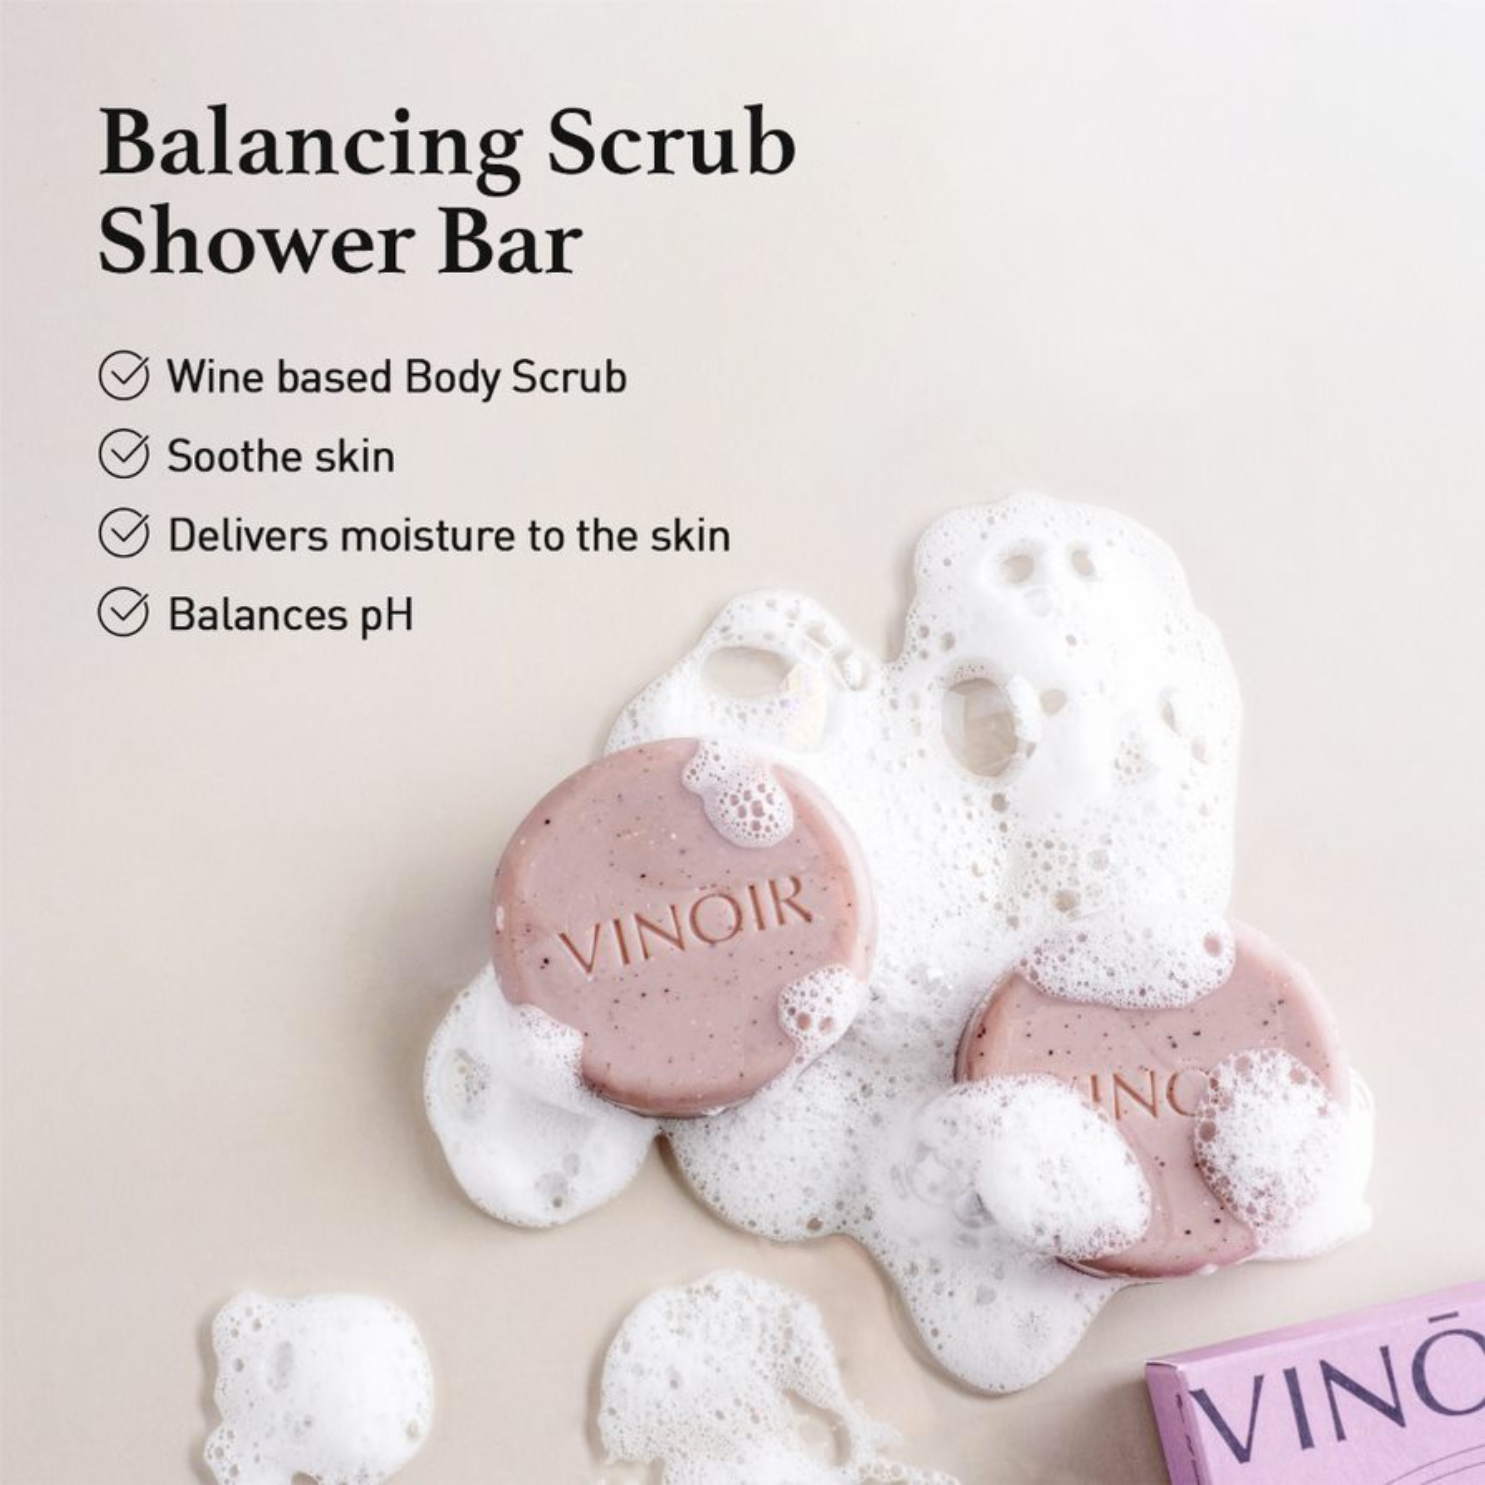 VINOIR Balancing Scrub Shower Bar